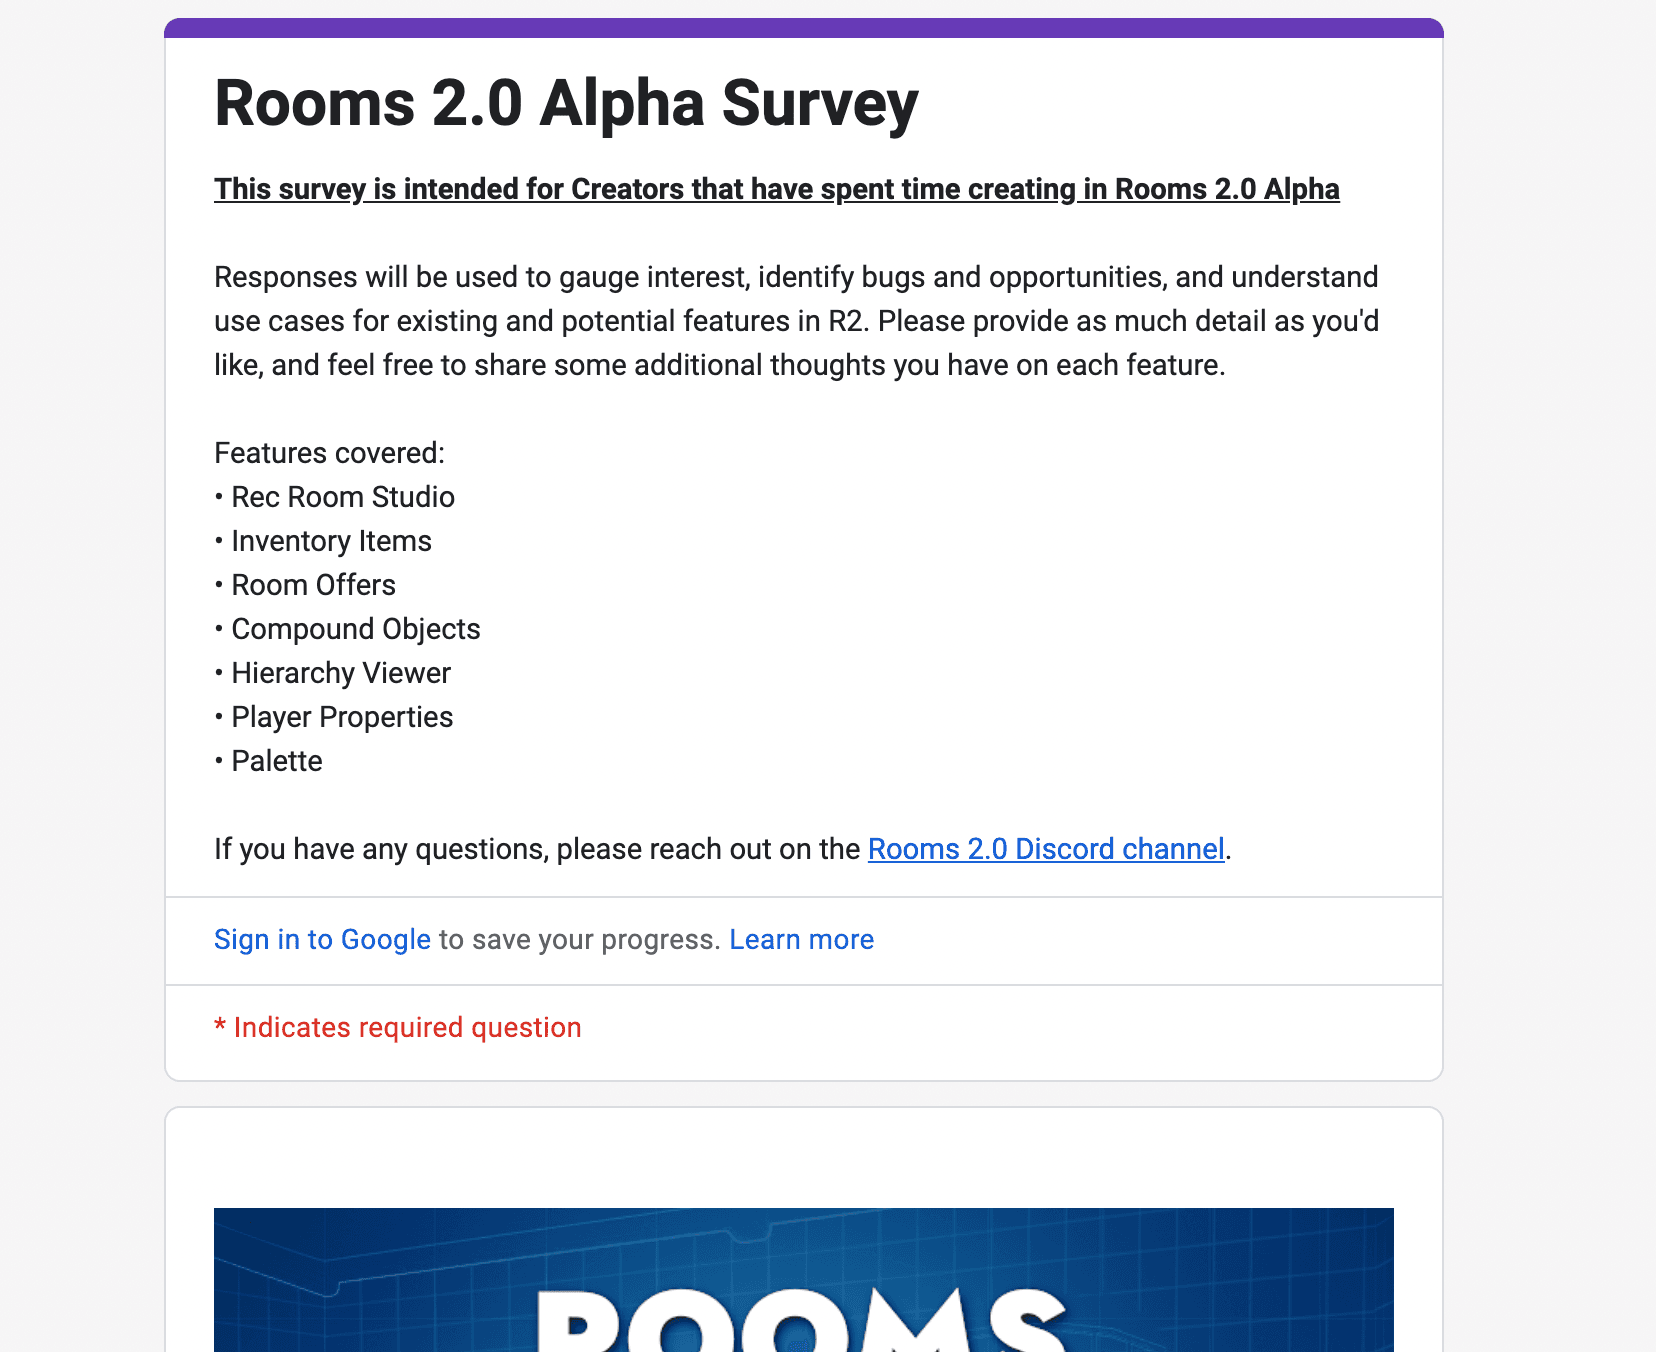 Rooms 2.0 Alpha Survey